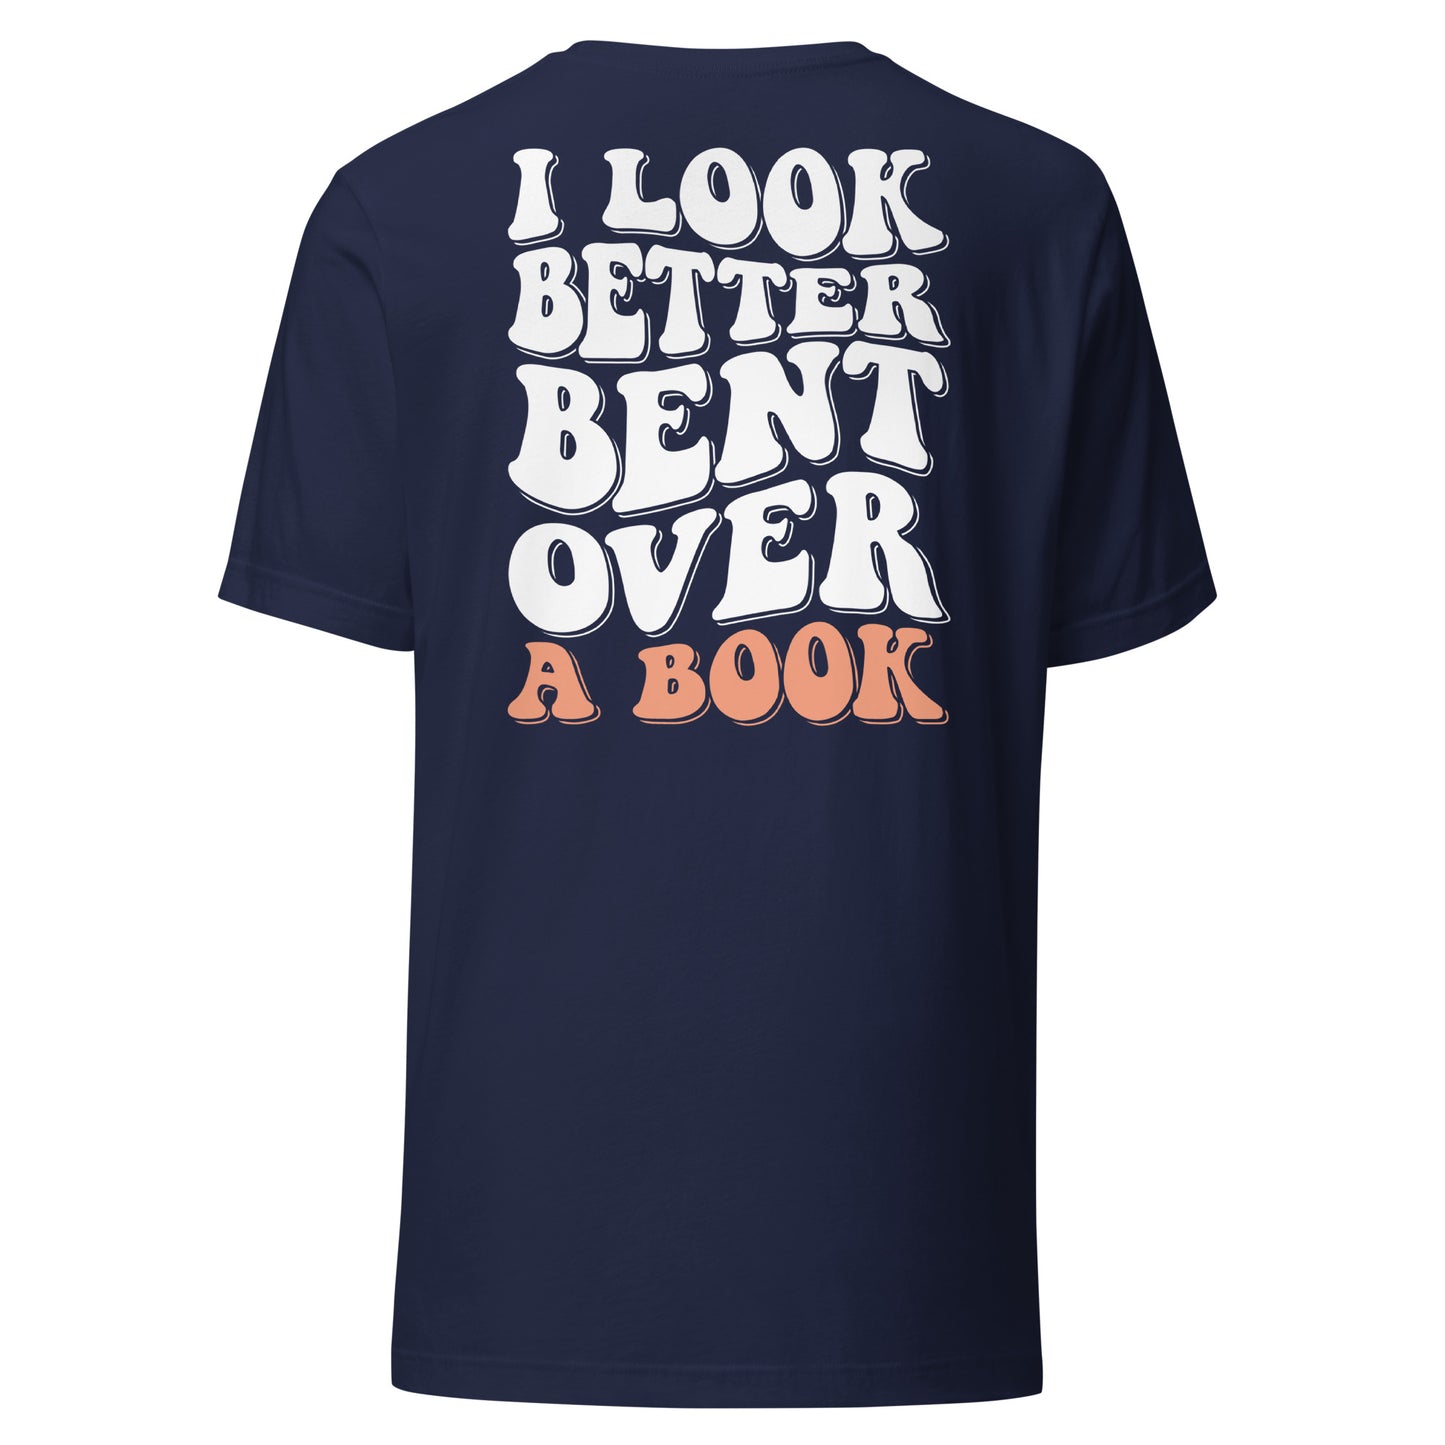 I look better bent over a book t-shirt